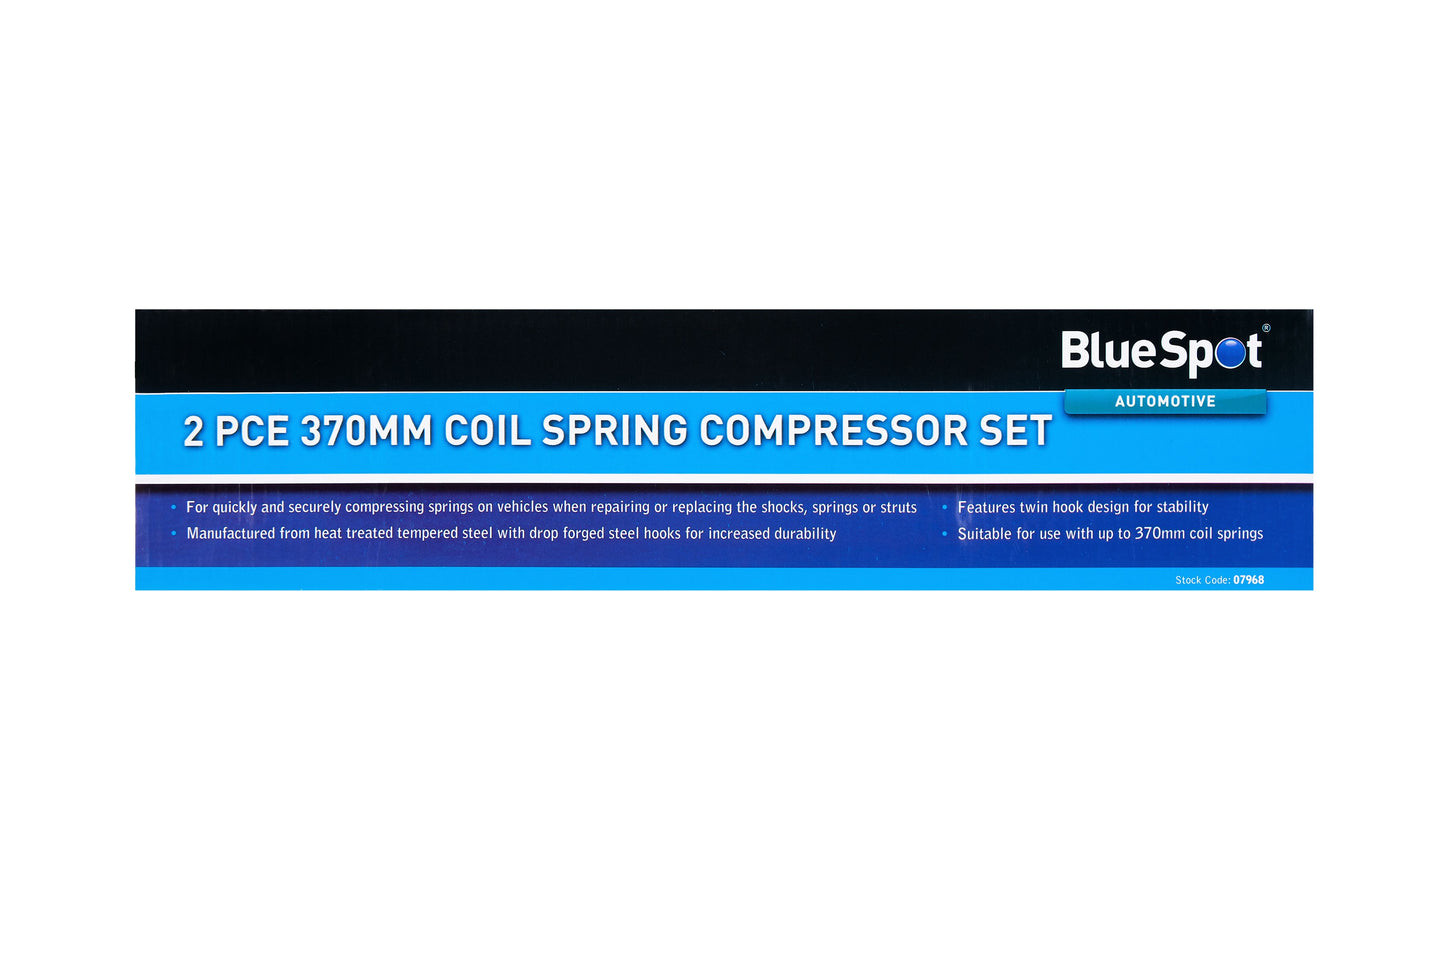 2 PCE 370MM COIL SPRING COMPRESSOR SET